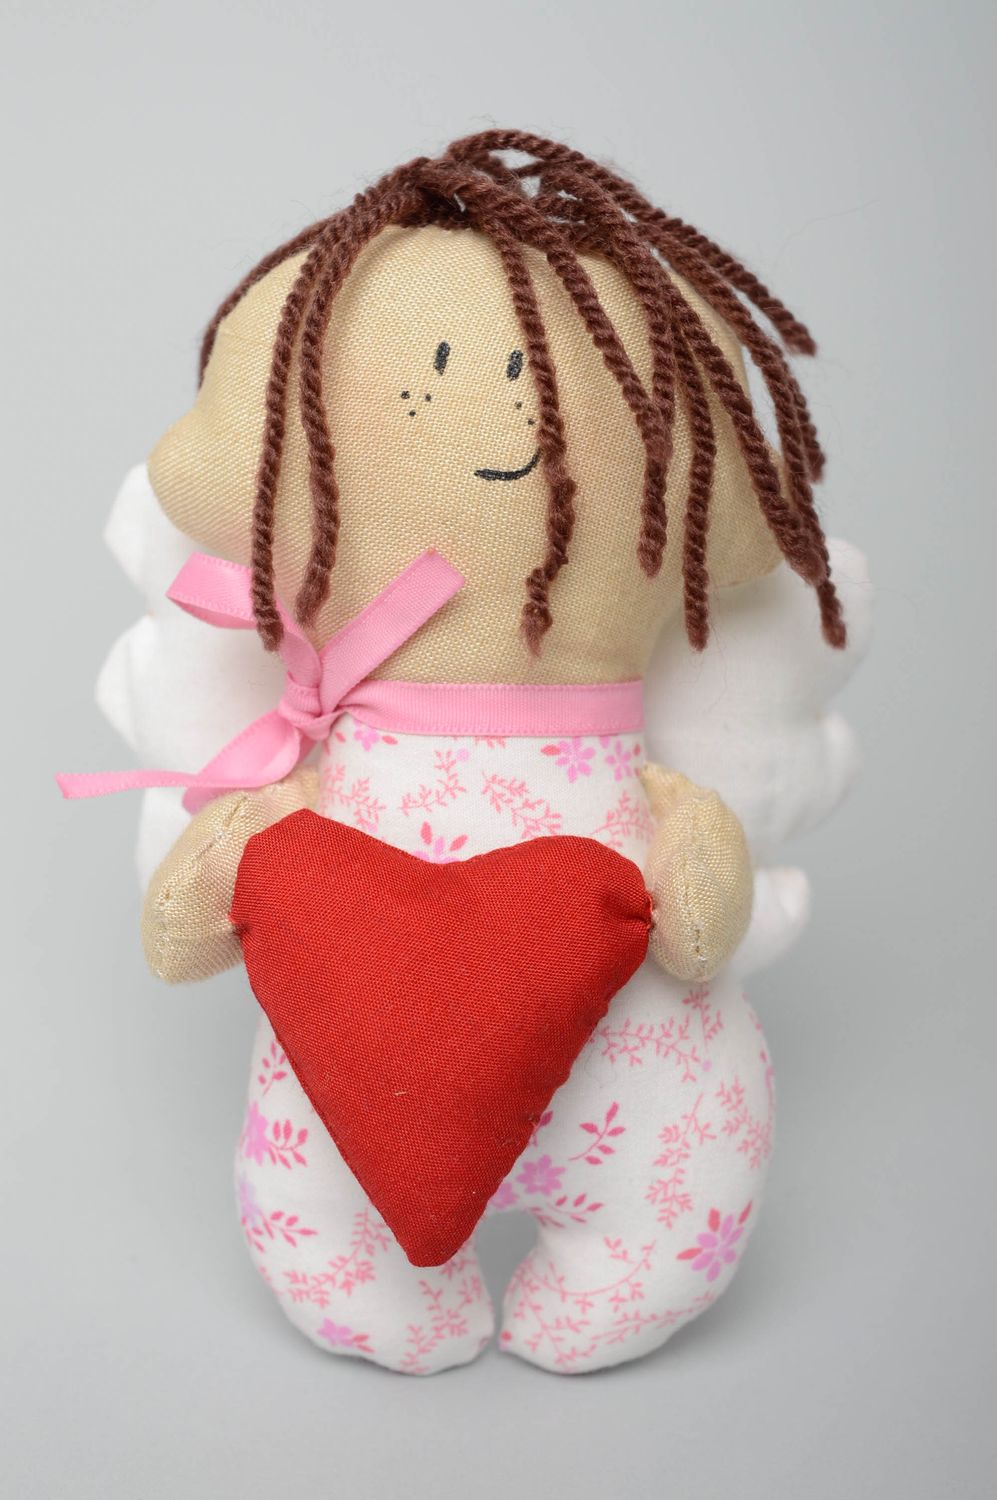 Мягкая игрушка ангел ко Дню святого Валентина фото 1